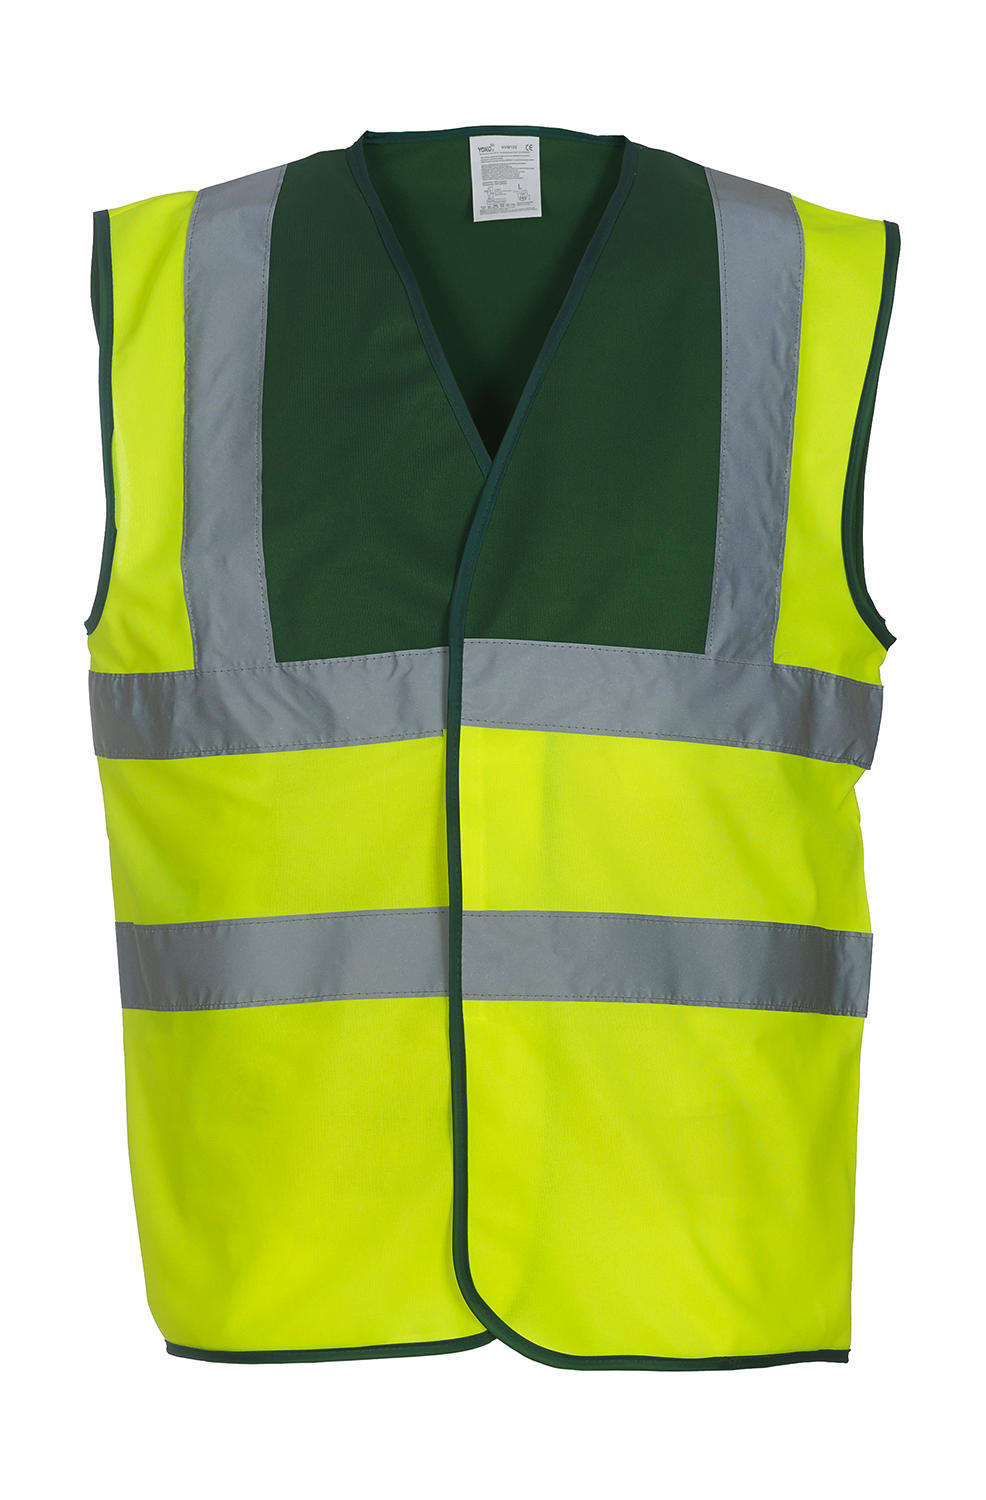 Odrazová vesta Fluo - fluo yellow/paramedic green